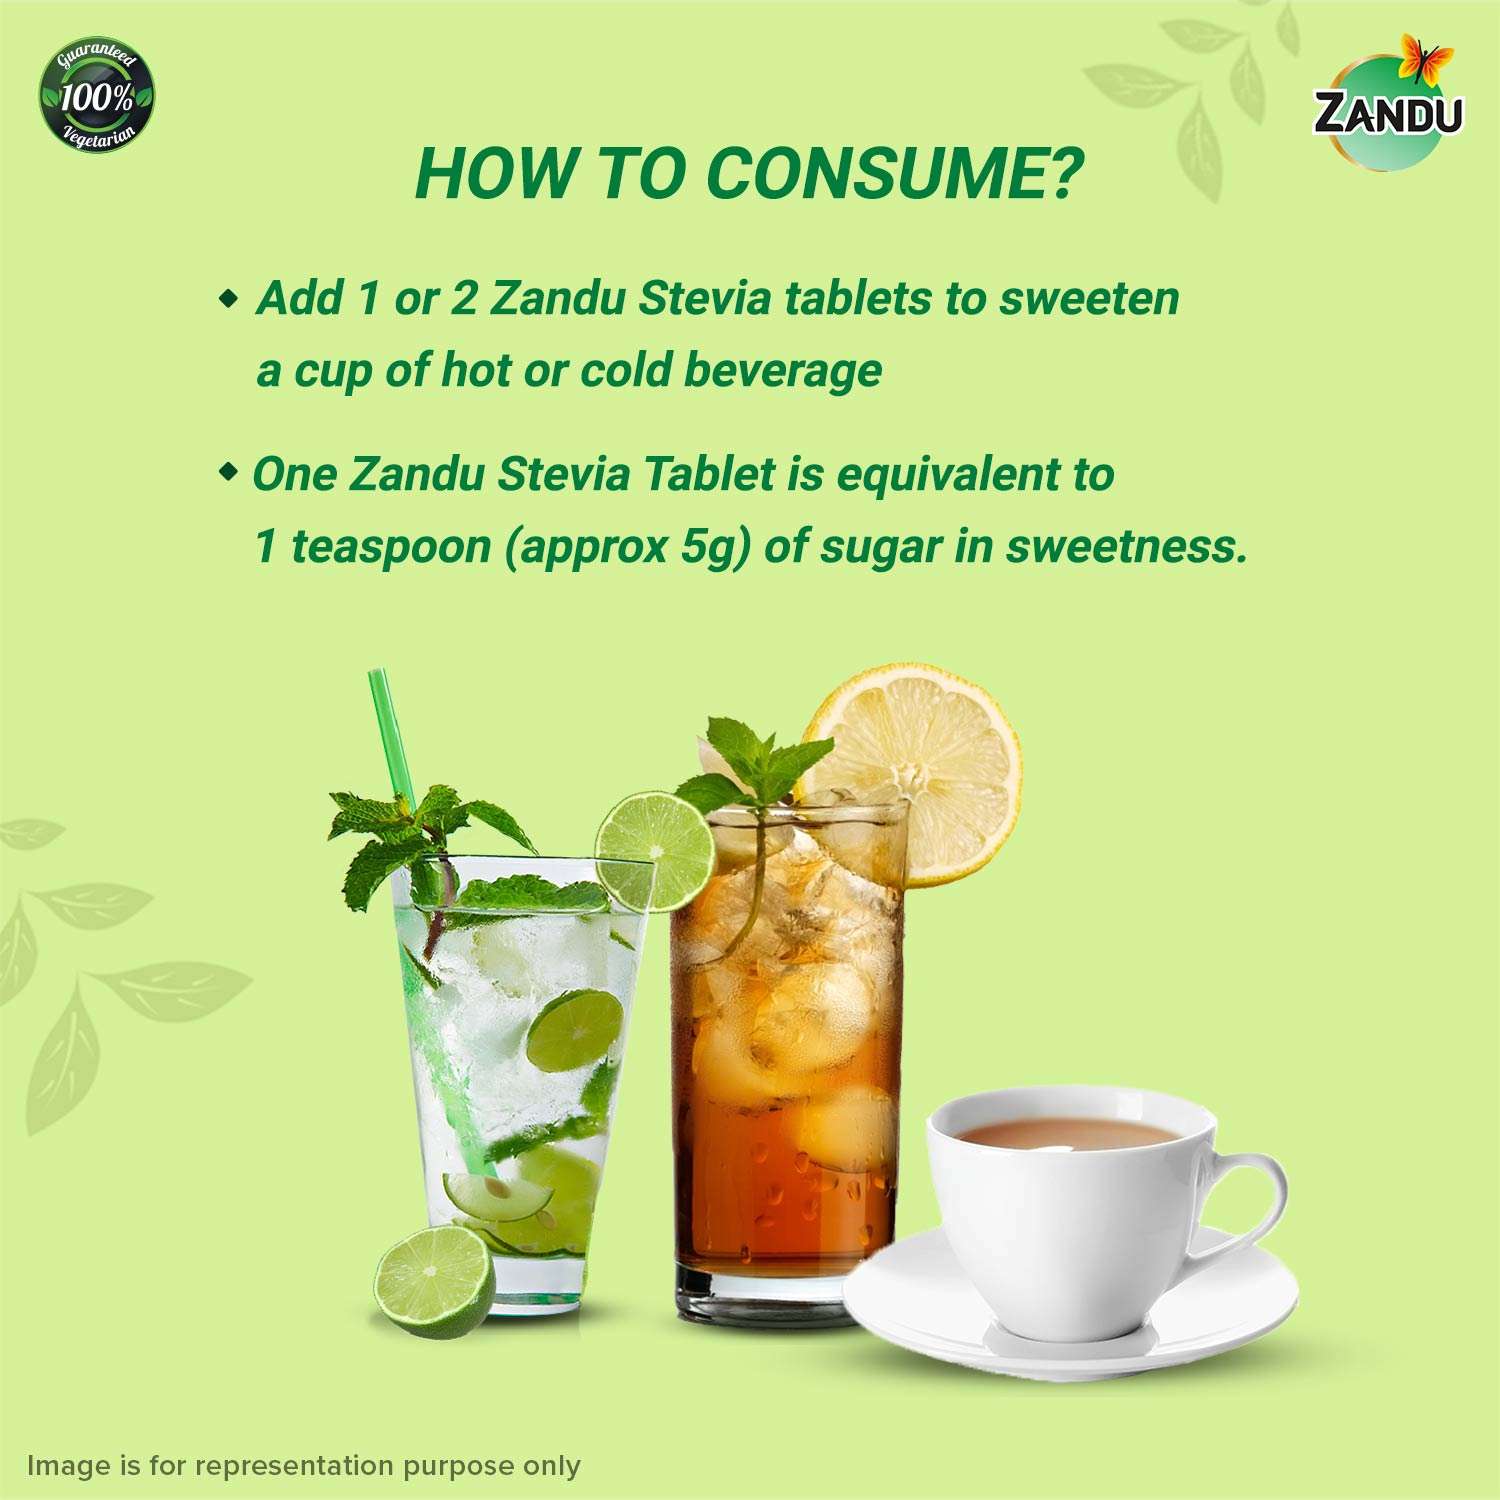 Stevia (Meethi Tulsi) Sugar Free Tablets -  Zero Calorie Sugar Alternative (8g -100N)